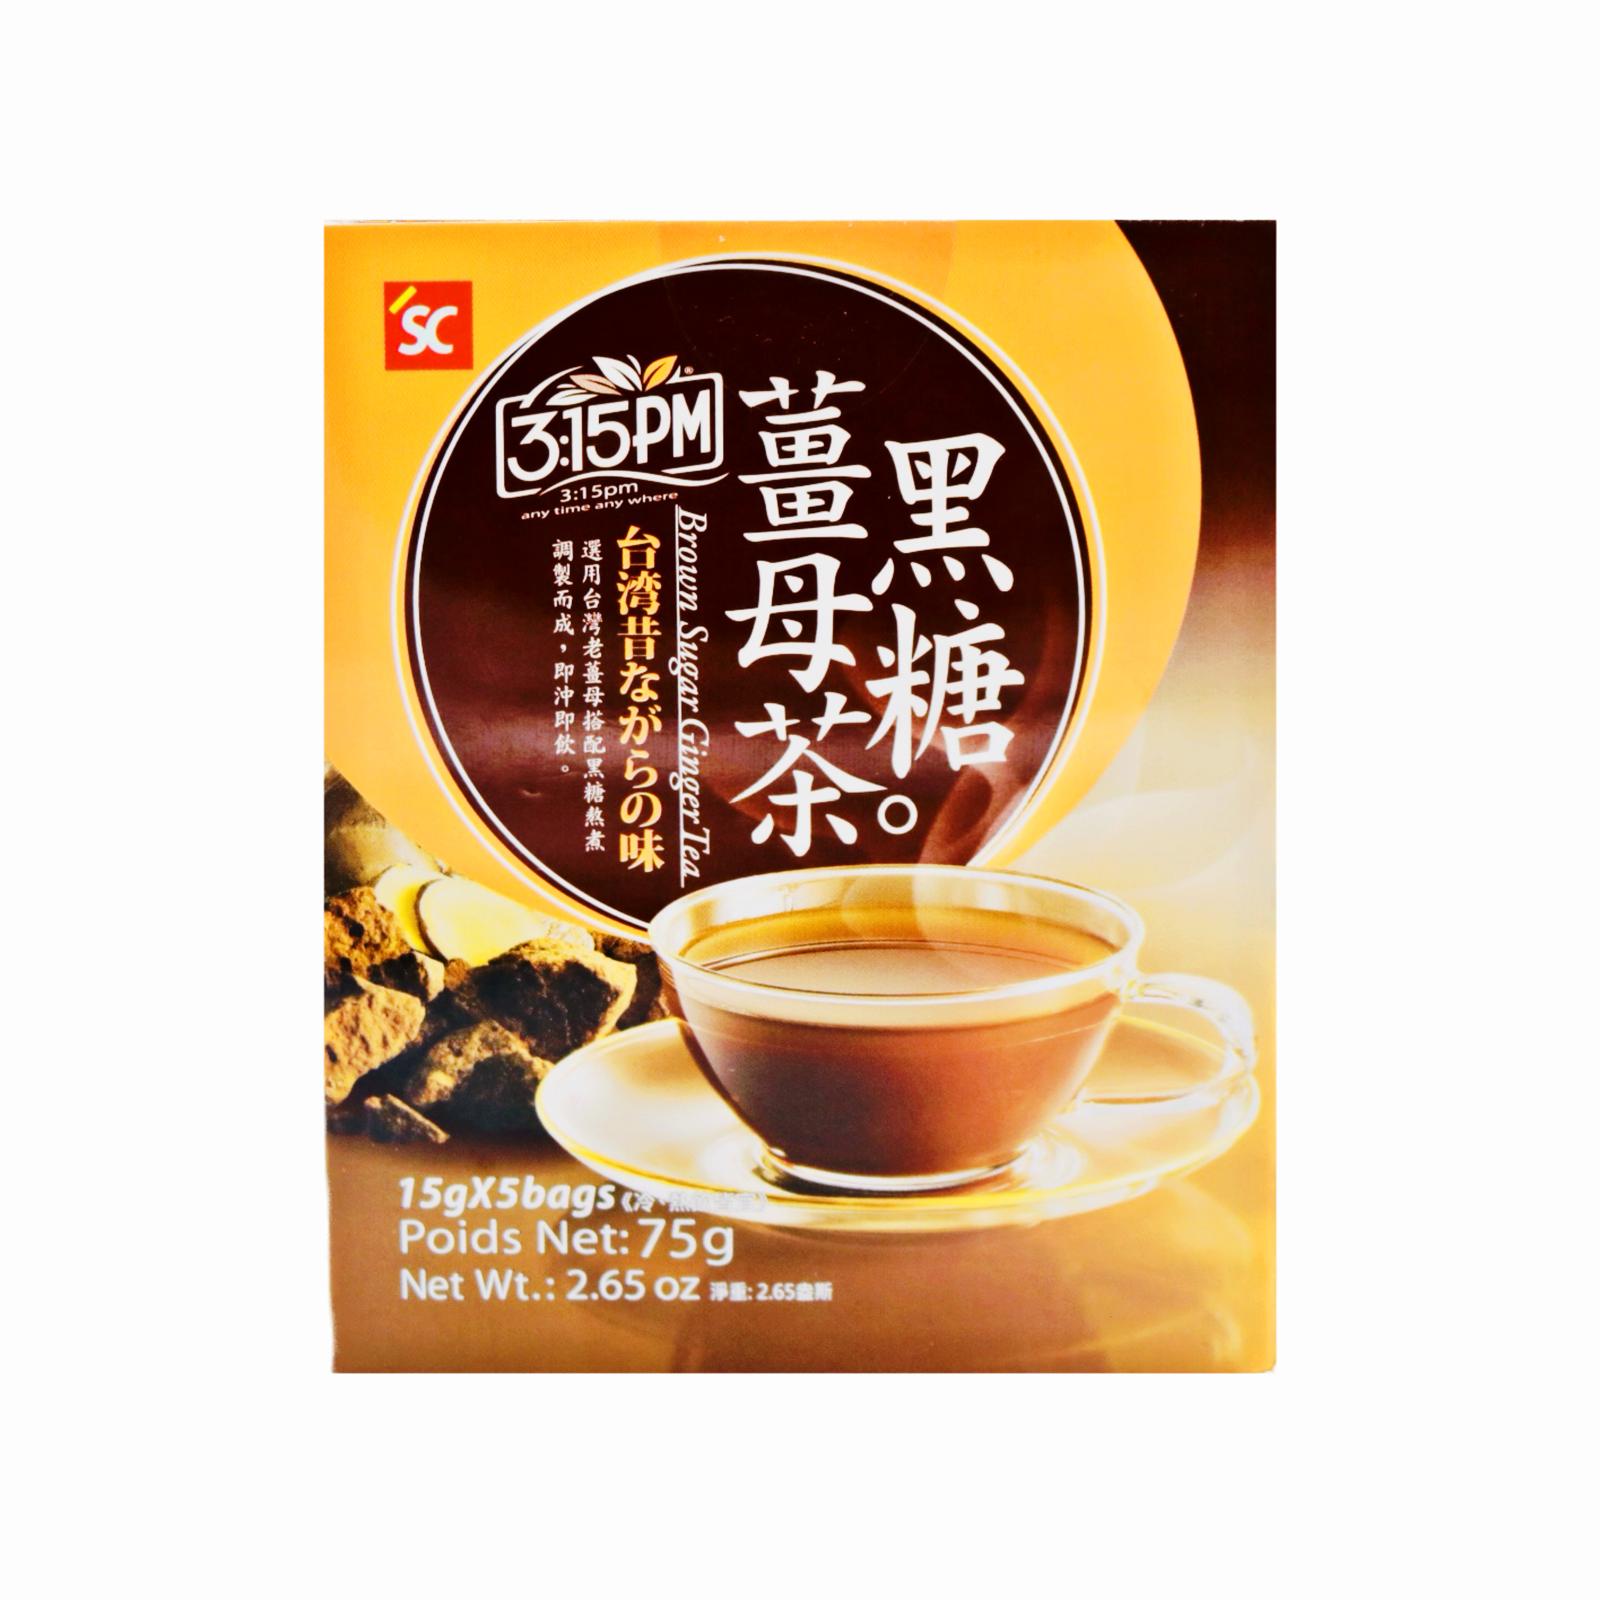 SC 3:15PM Brown Sugar Ginger Tea (15g*5bags) 75g